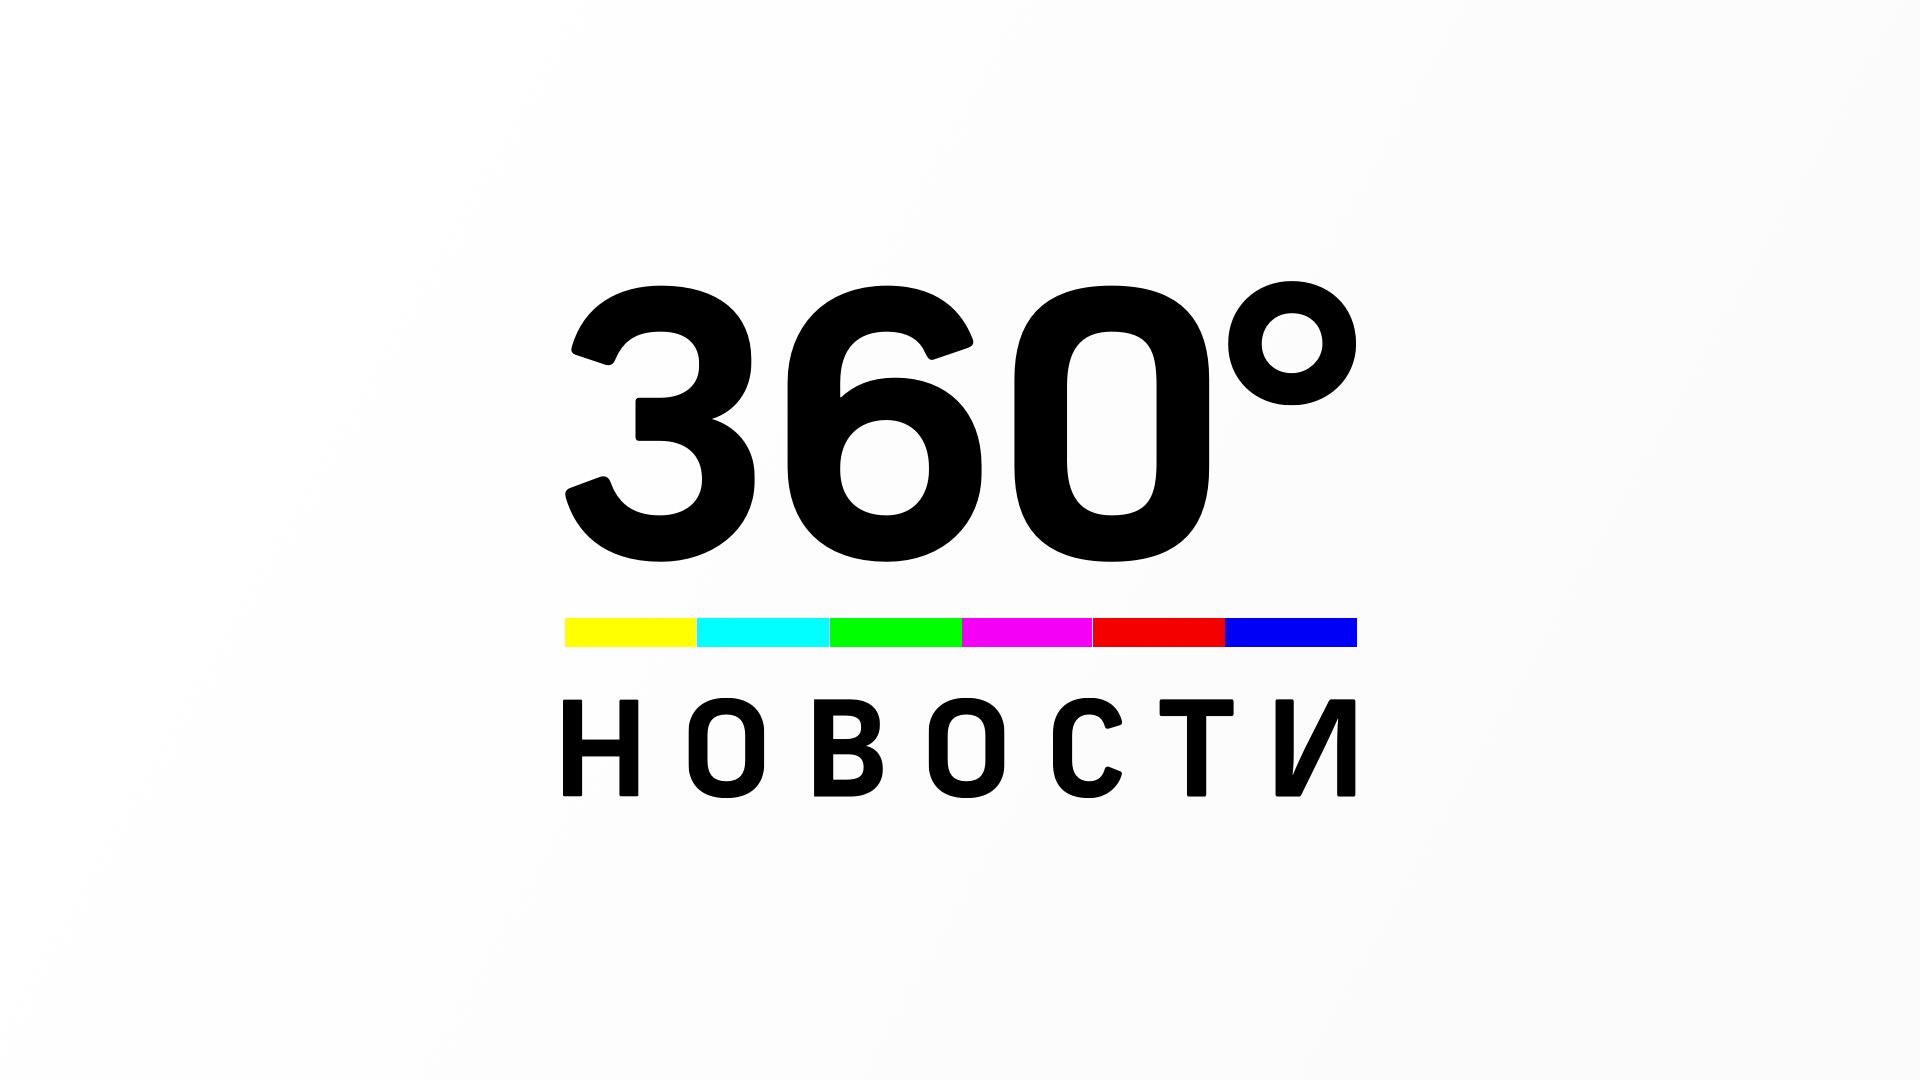 360tv. 360 Логотип. 360 Новости логотип. Канал 360 эмблема. Телеканал 360 новости.